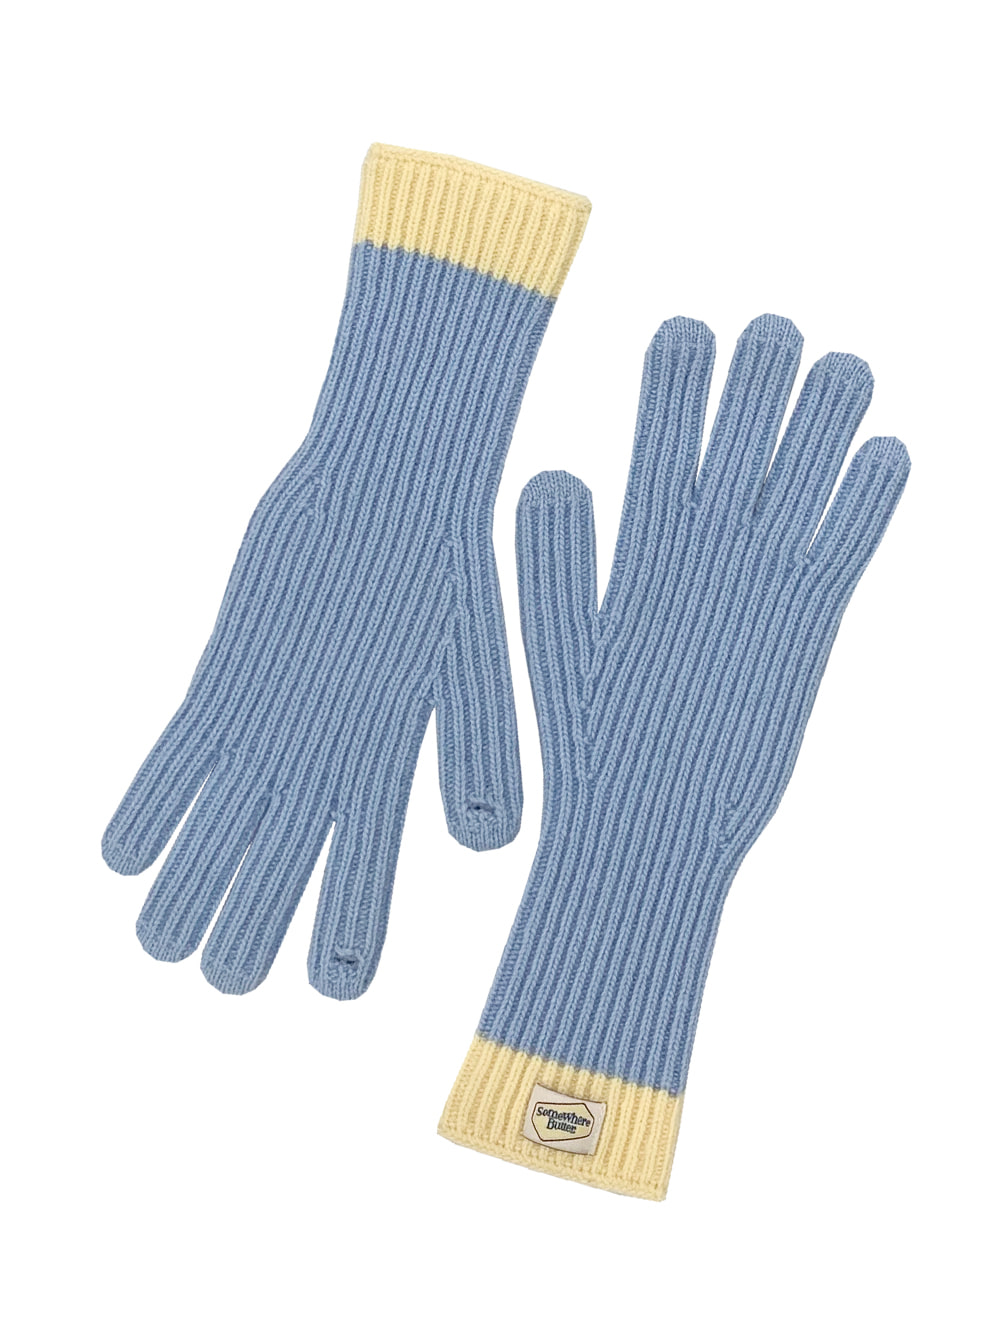 butter wool gloves - baby blue